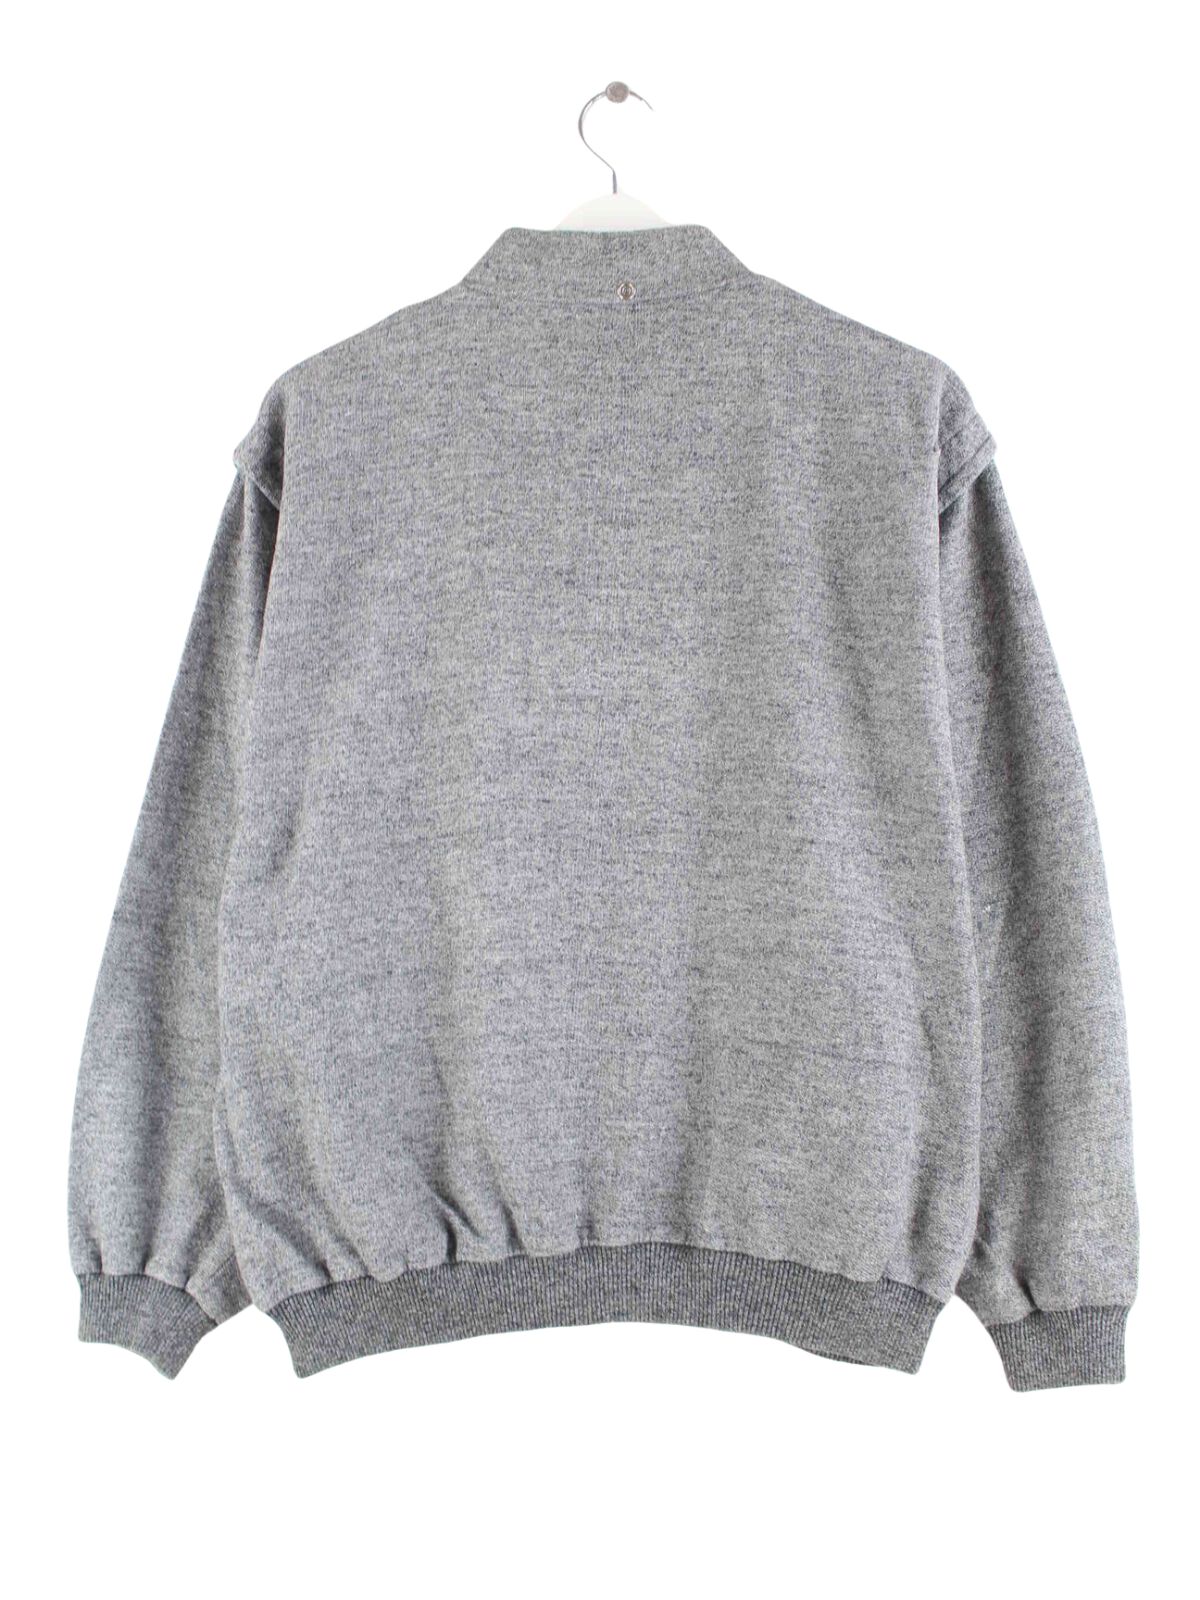 Vintage 80s Vintage Sweater Grau M (back image)